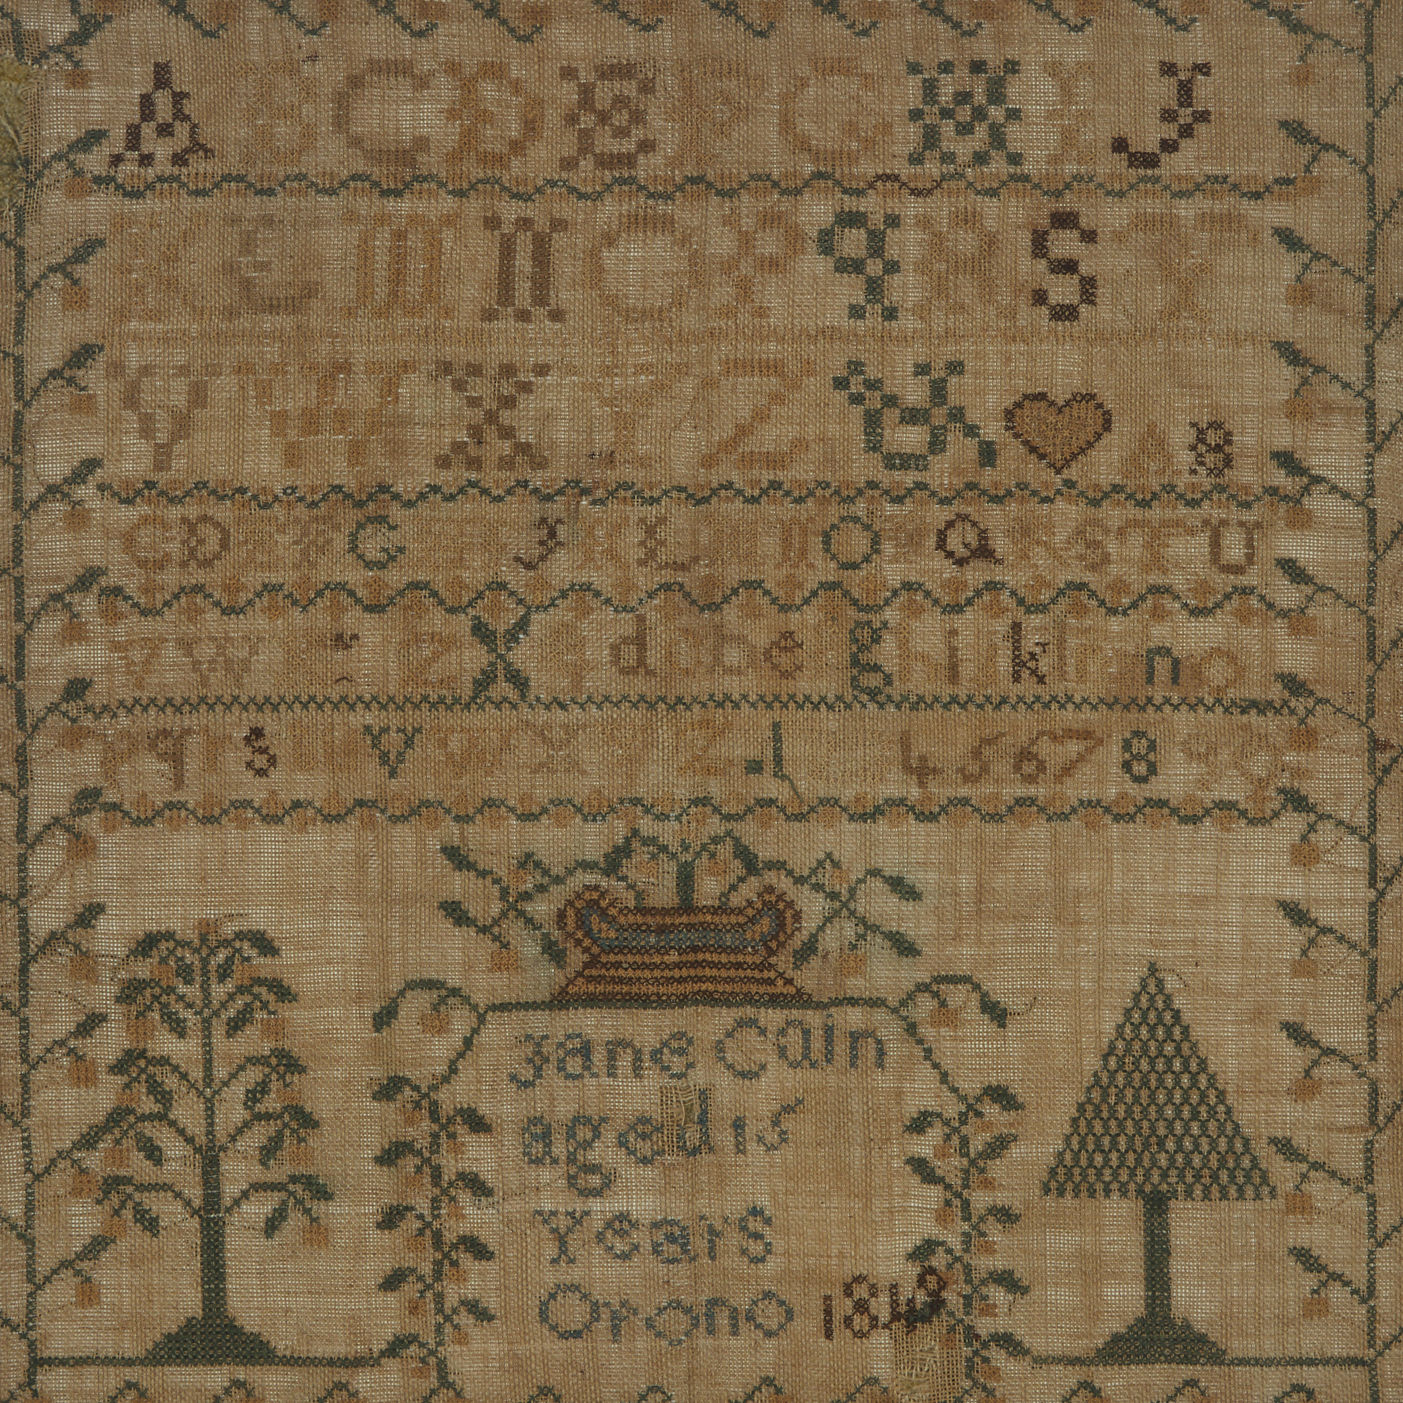 Ontario Pictorial Alphabet Sampler, Jane Cain, aged 15 Years, Orono, 1848